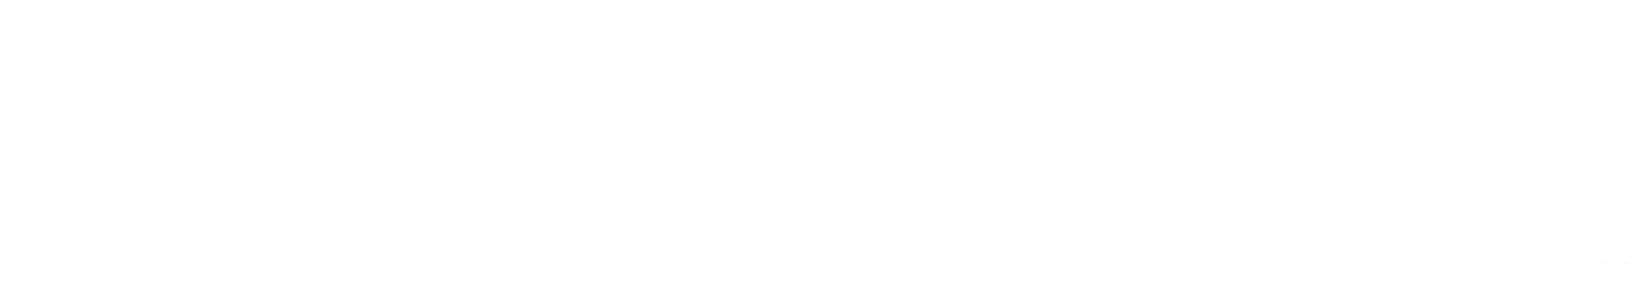 europharma logo white.png